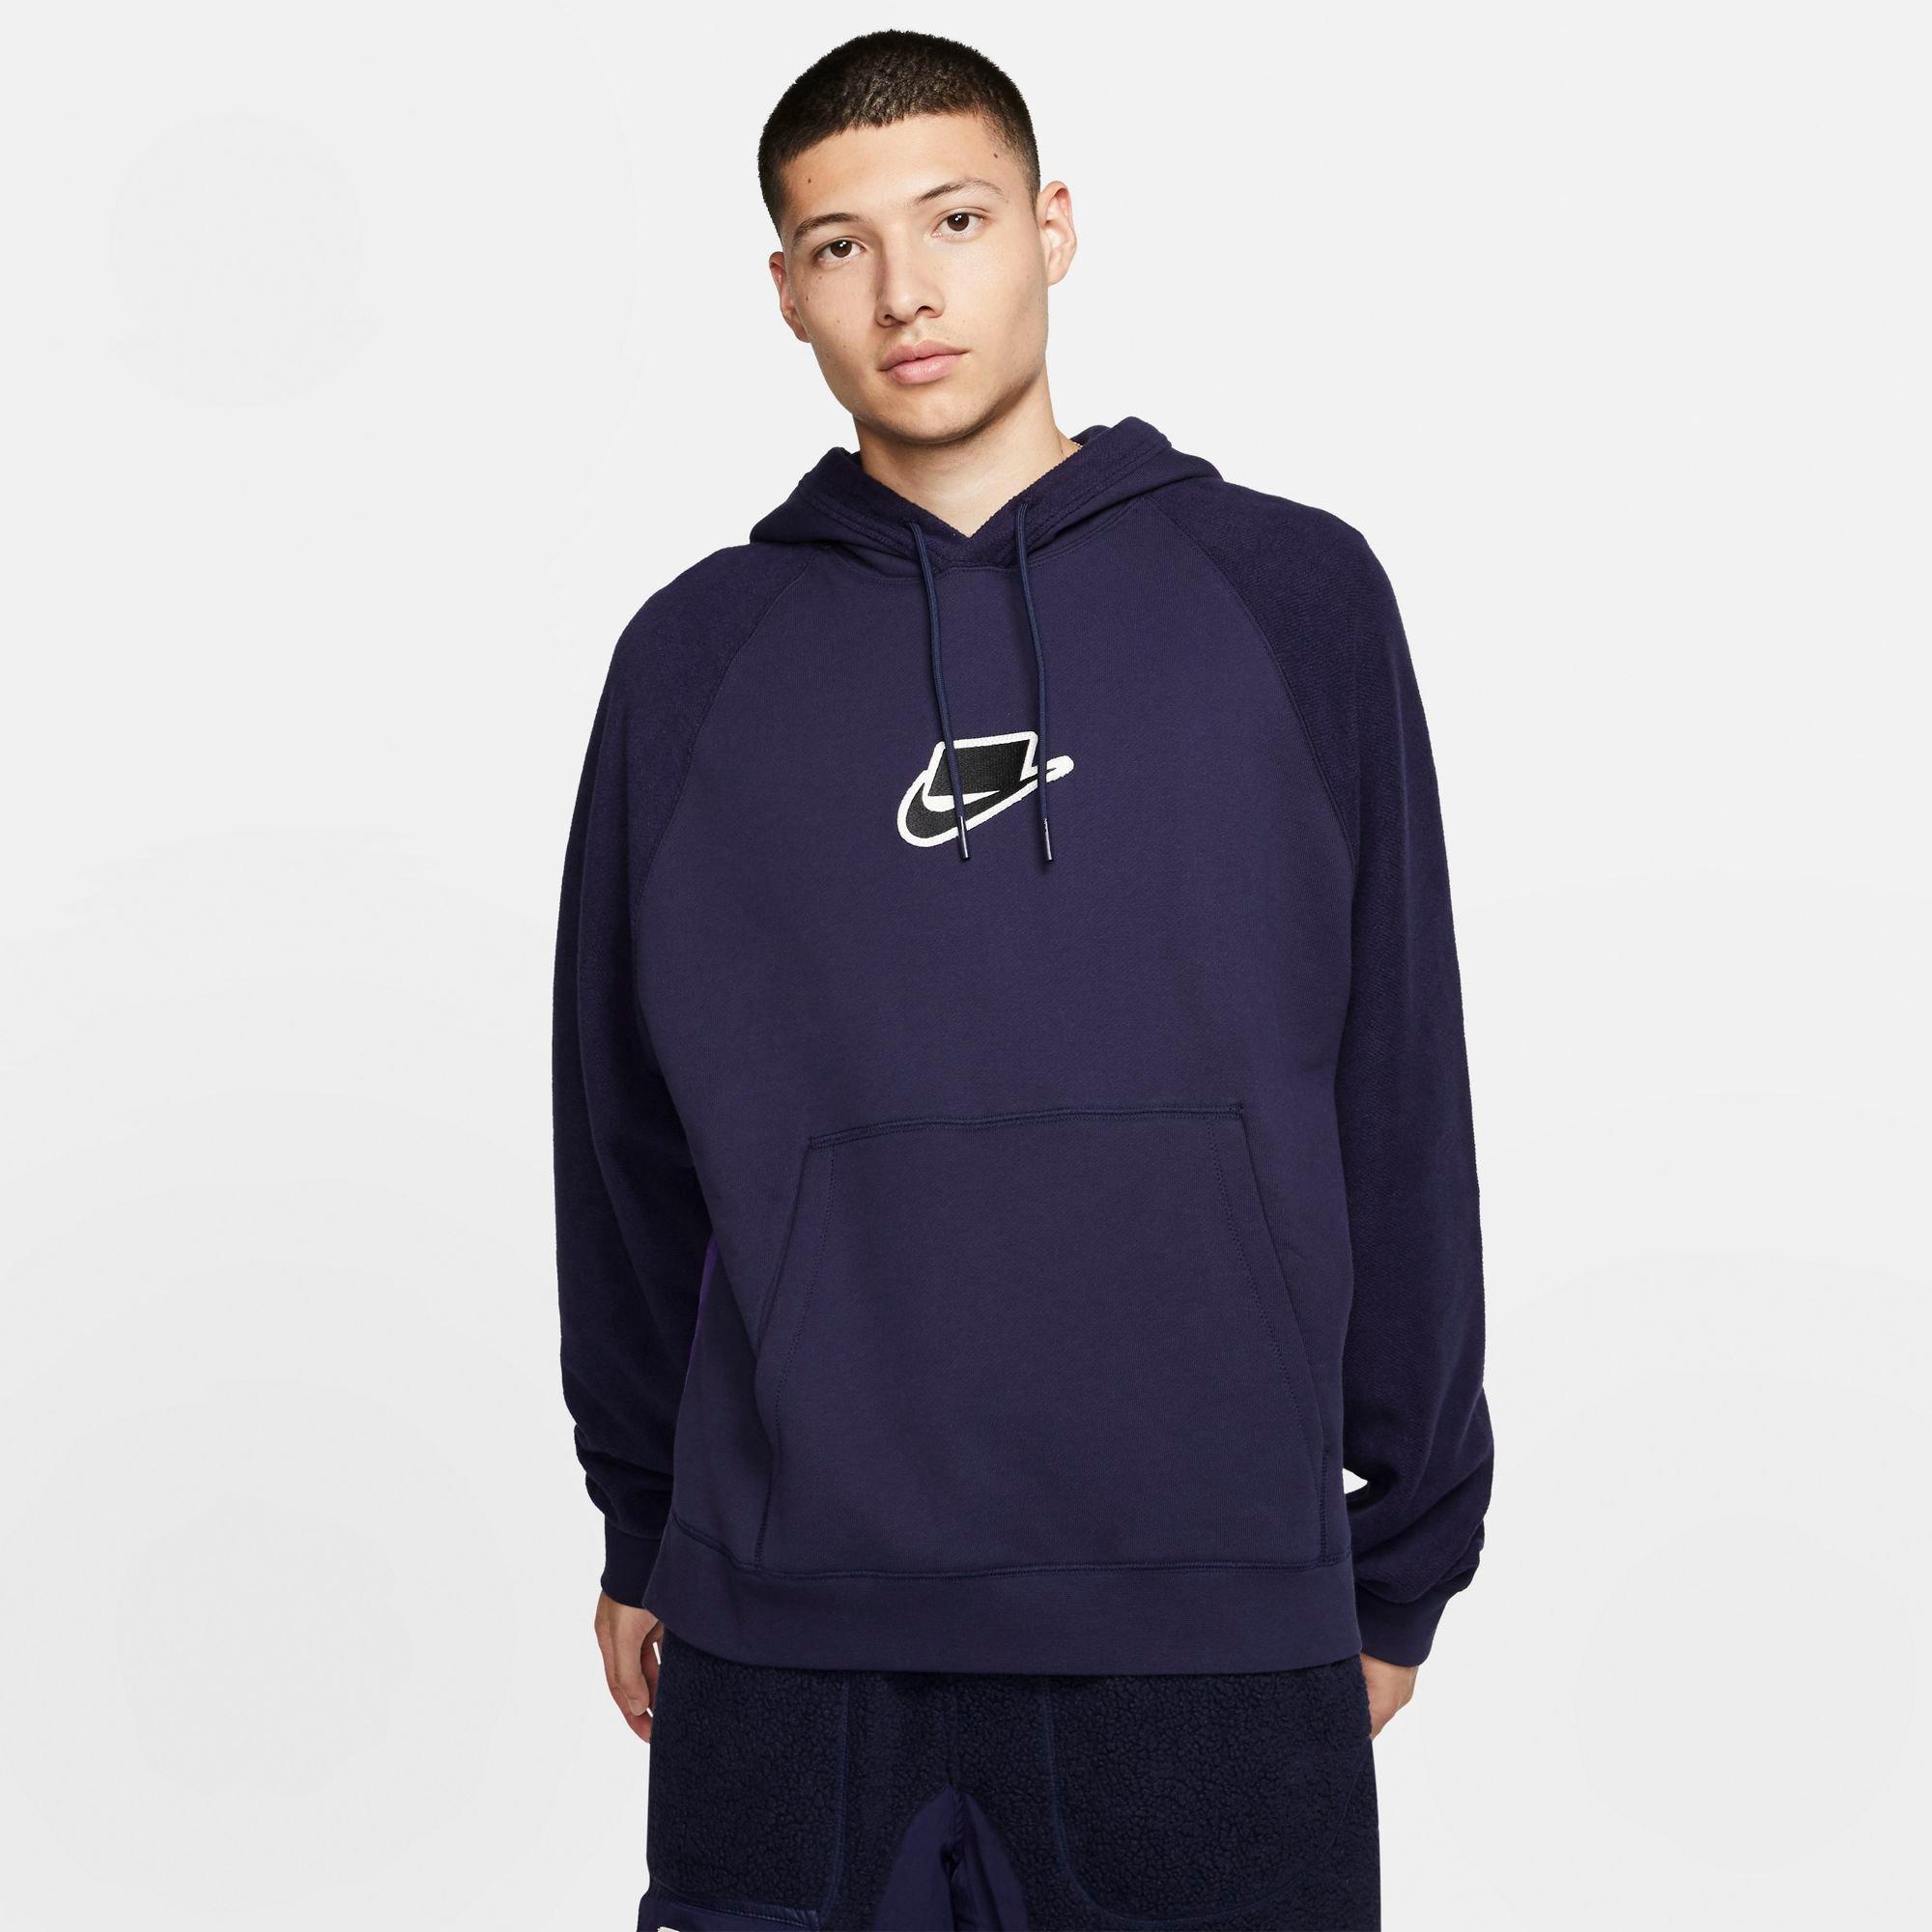 court purple nike hoodie